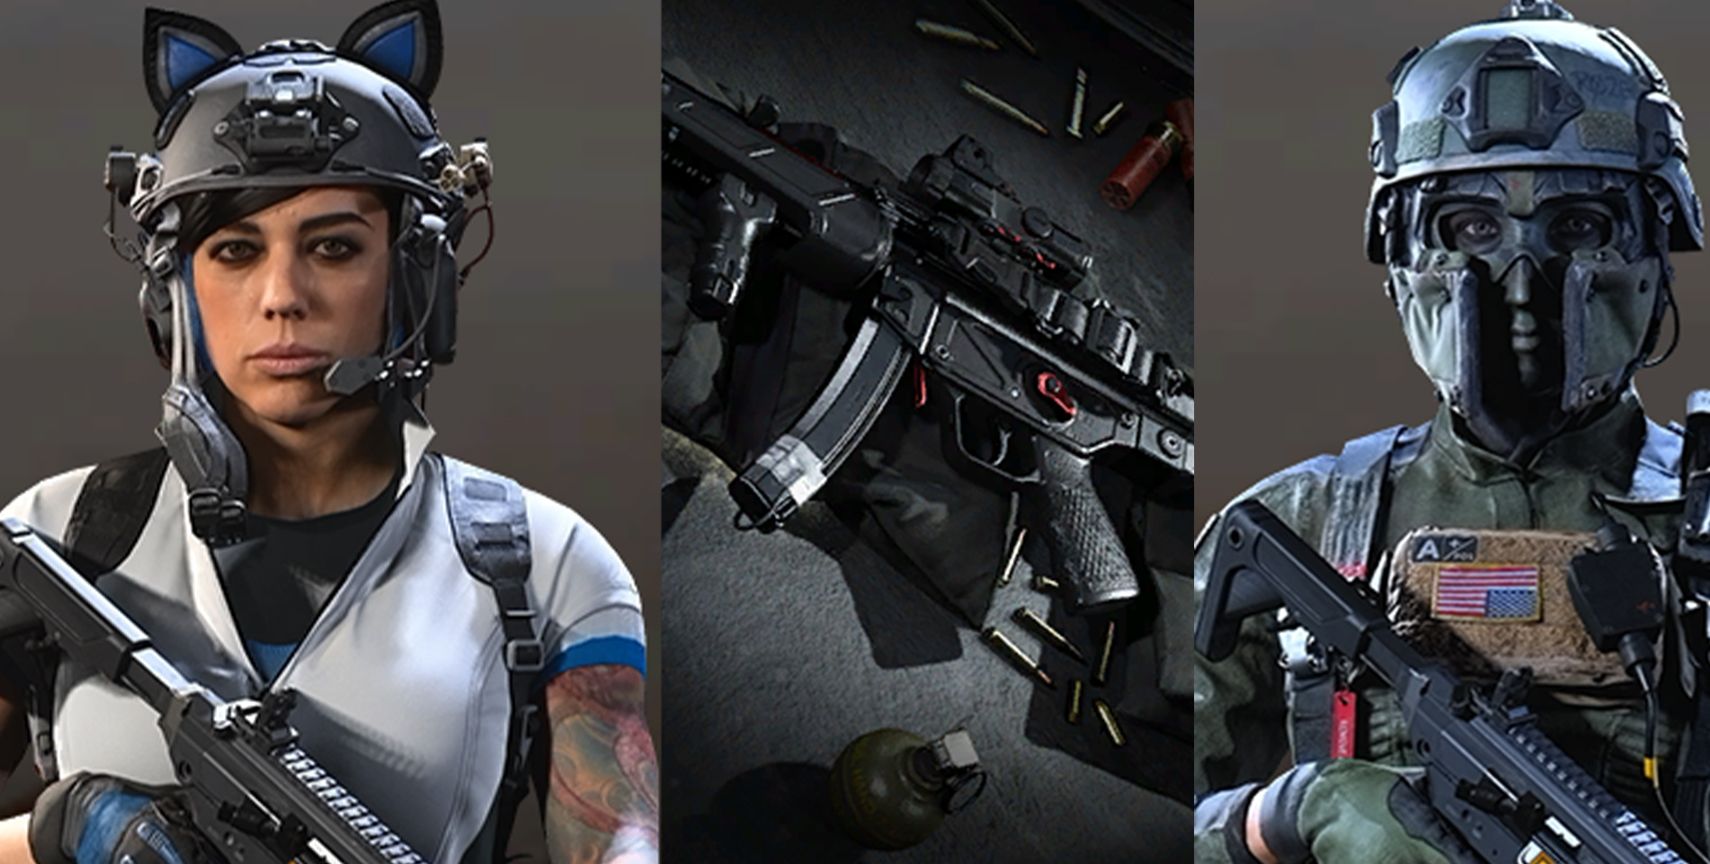 Call of Duty Modern Warfare Warzone Roze, Mara Kawaii pack and professional skin pack highlights